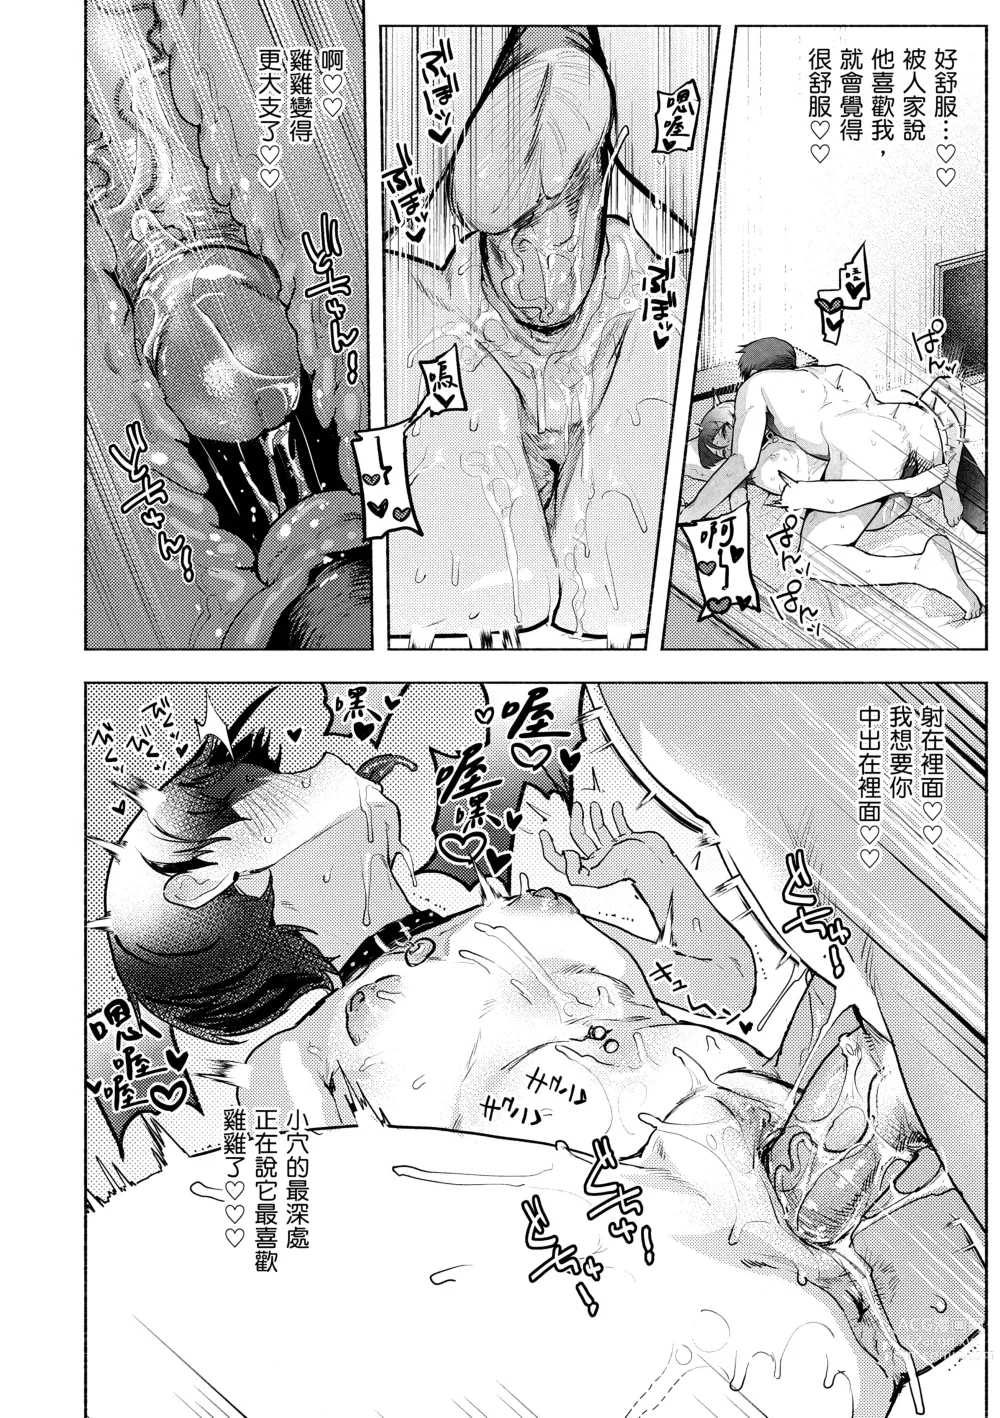 Page 140 of manga 肉食系草莓蛋糕 (decensored)